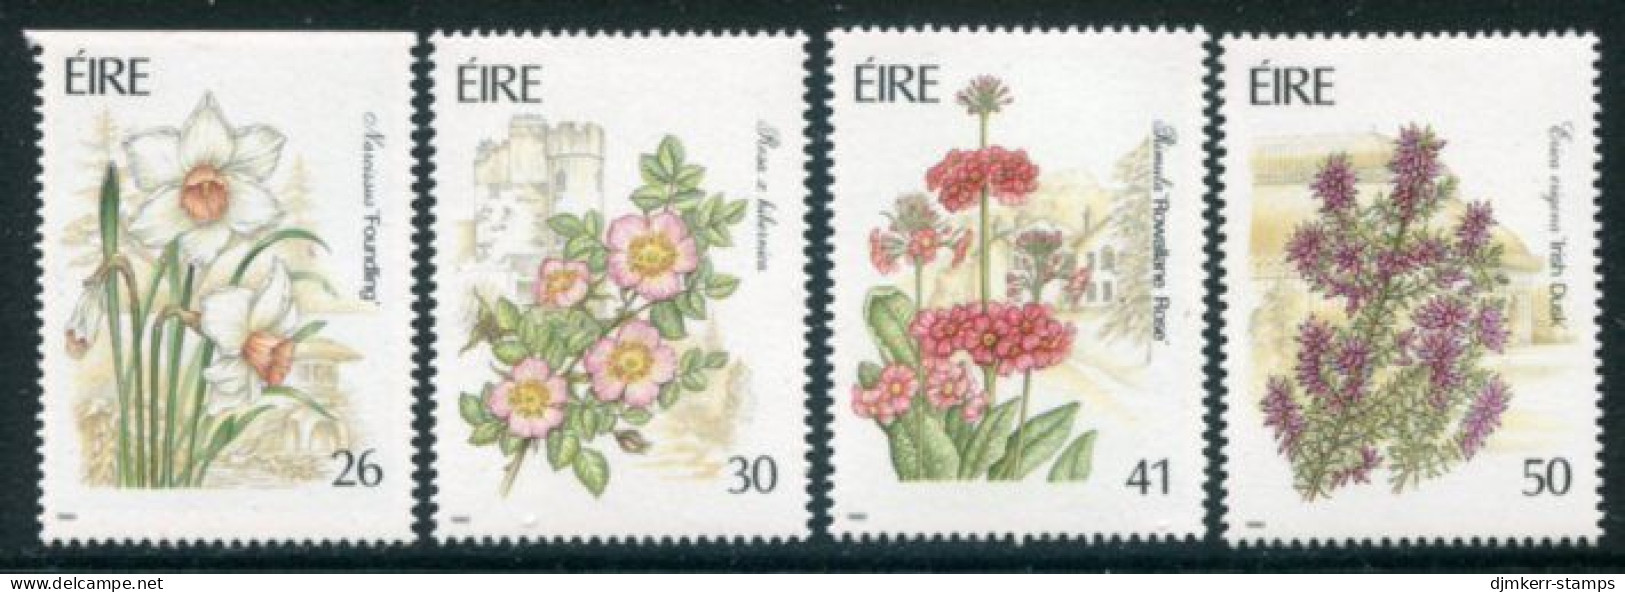 IRELAND1990 Irish Garden Flowers MNH / **.  Michel 729-732 - Unused Stamps